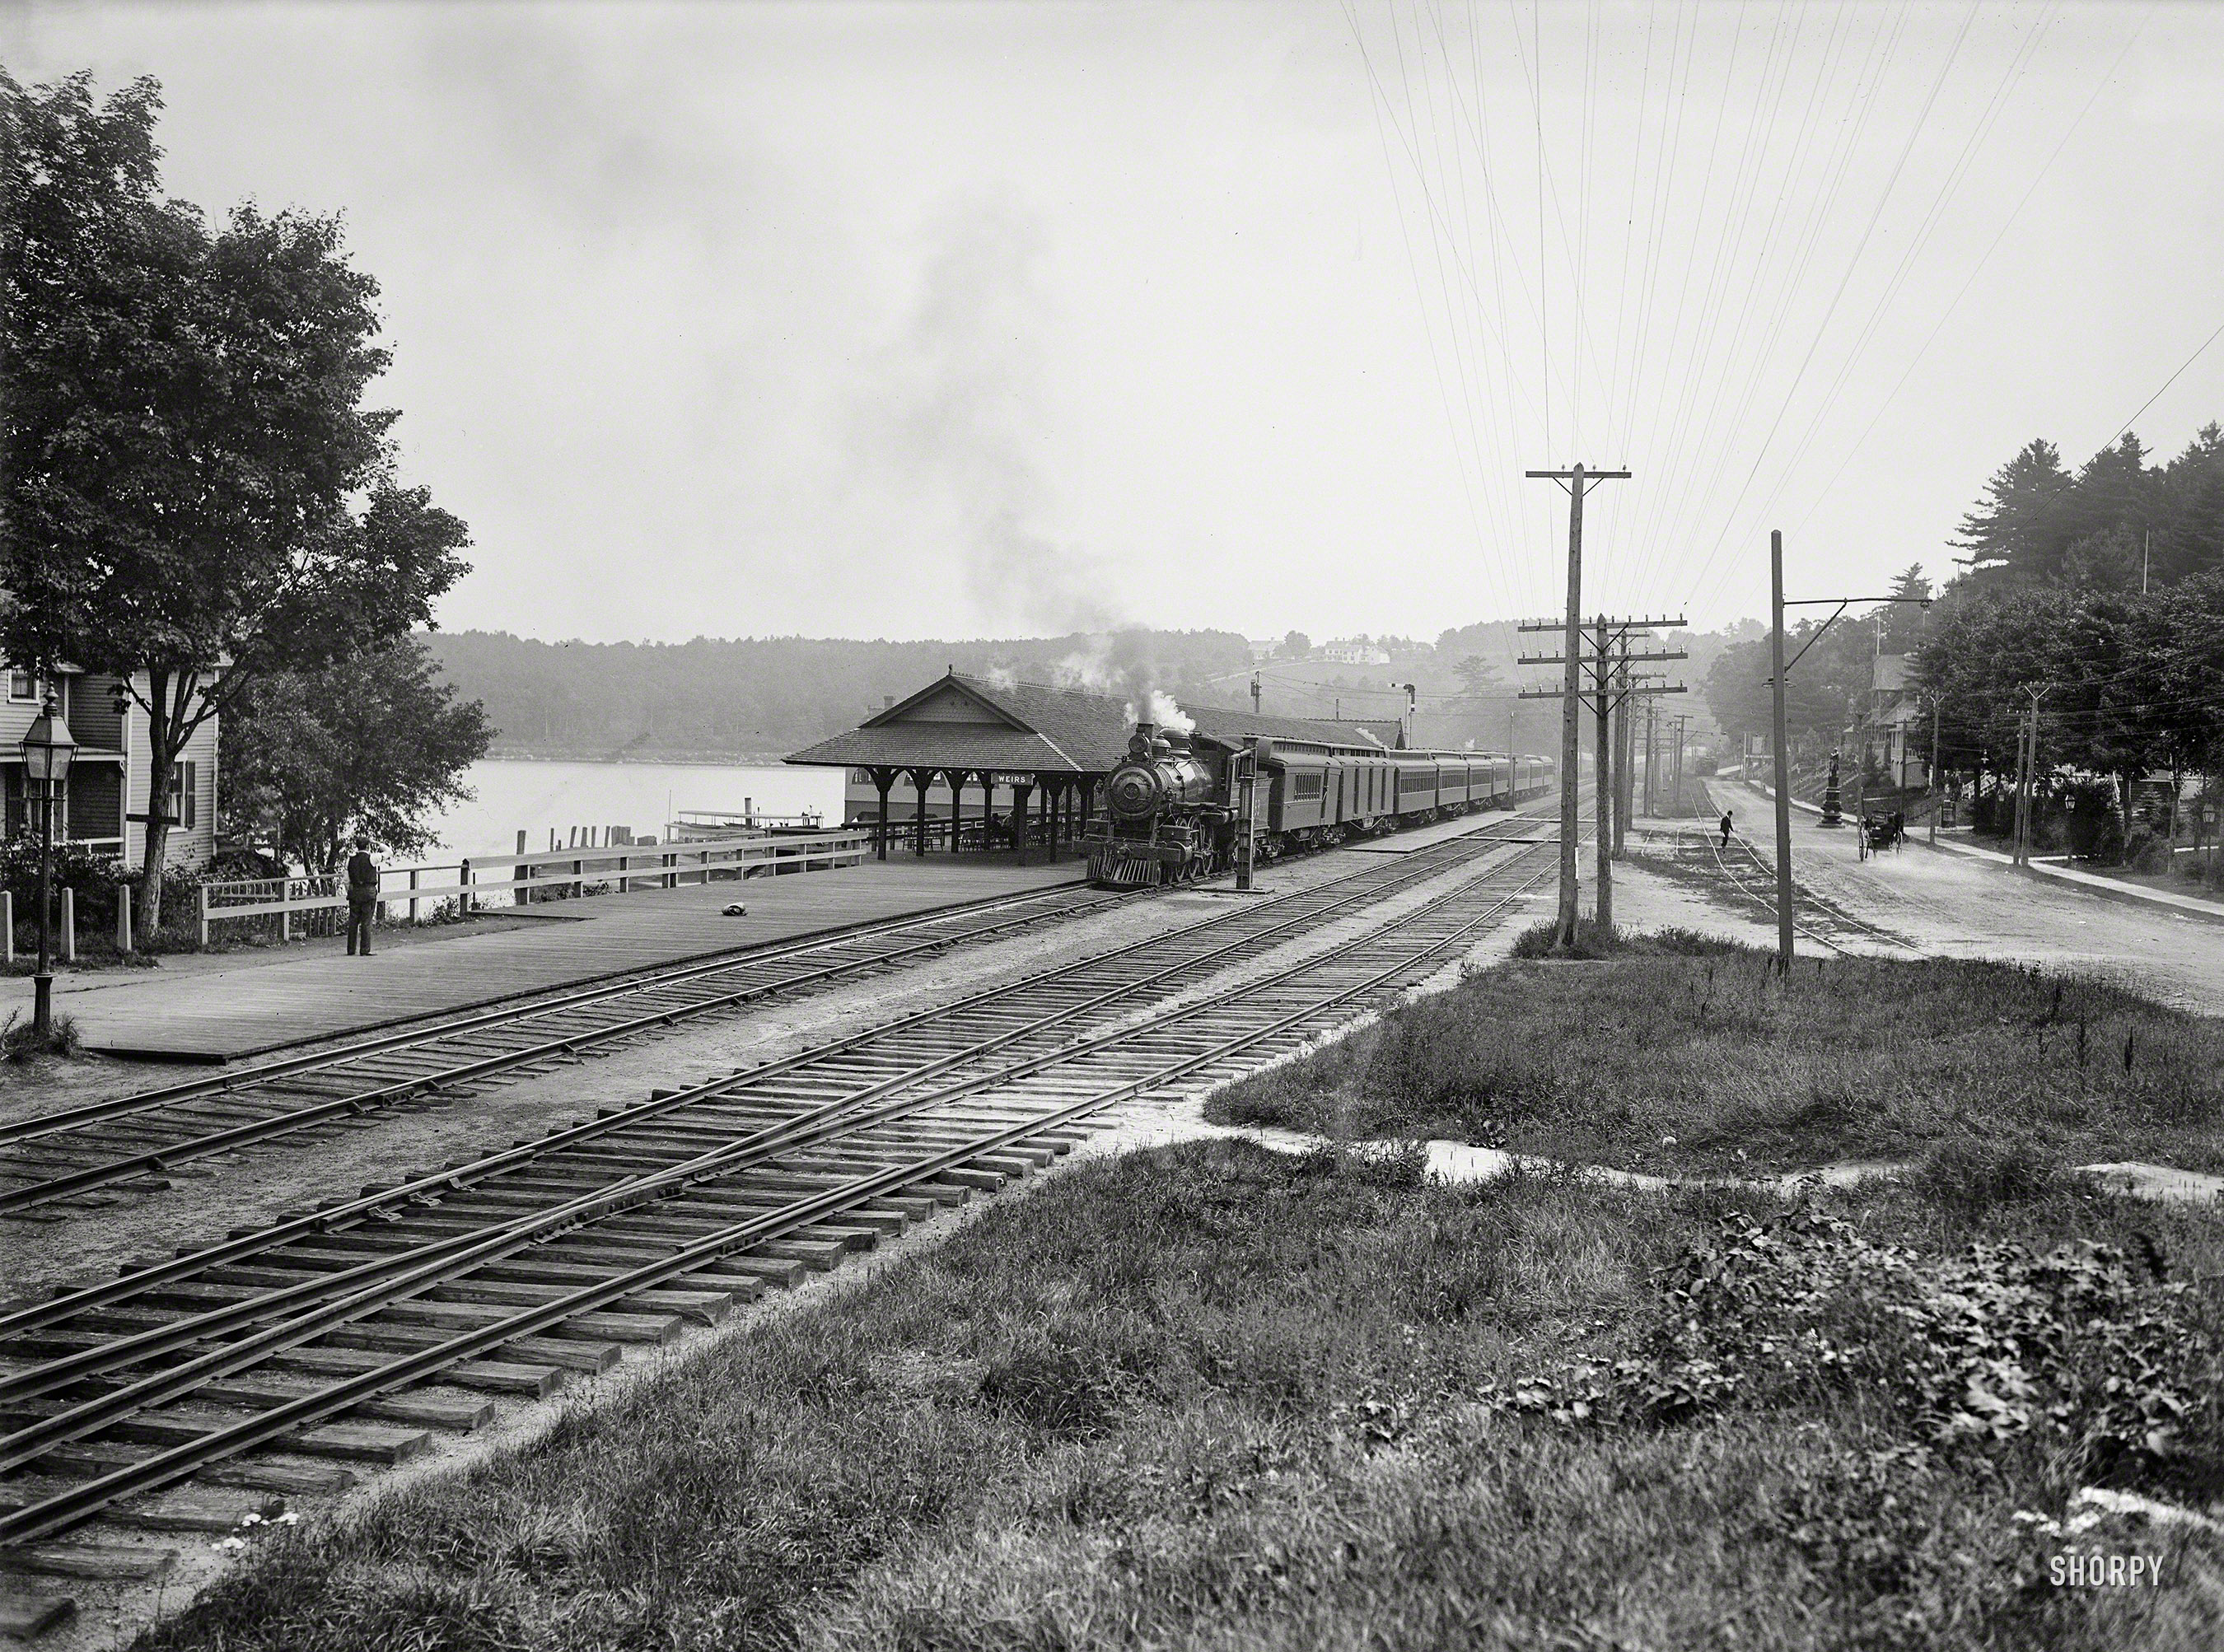 Circa 1906. "Railway station at Weirs -- Lake Winnipesaukee, New Hampshire." 5x7 inch dry plate glass negative, Detroit Publishing Company. View full size.